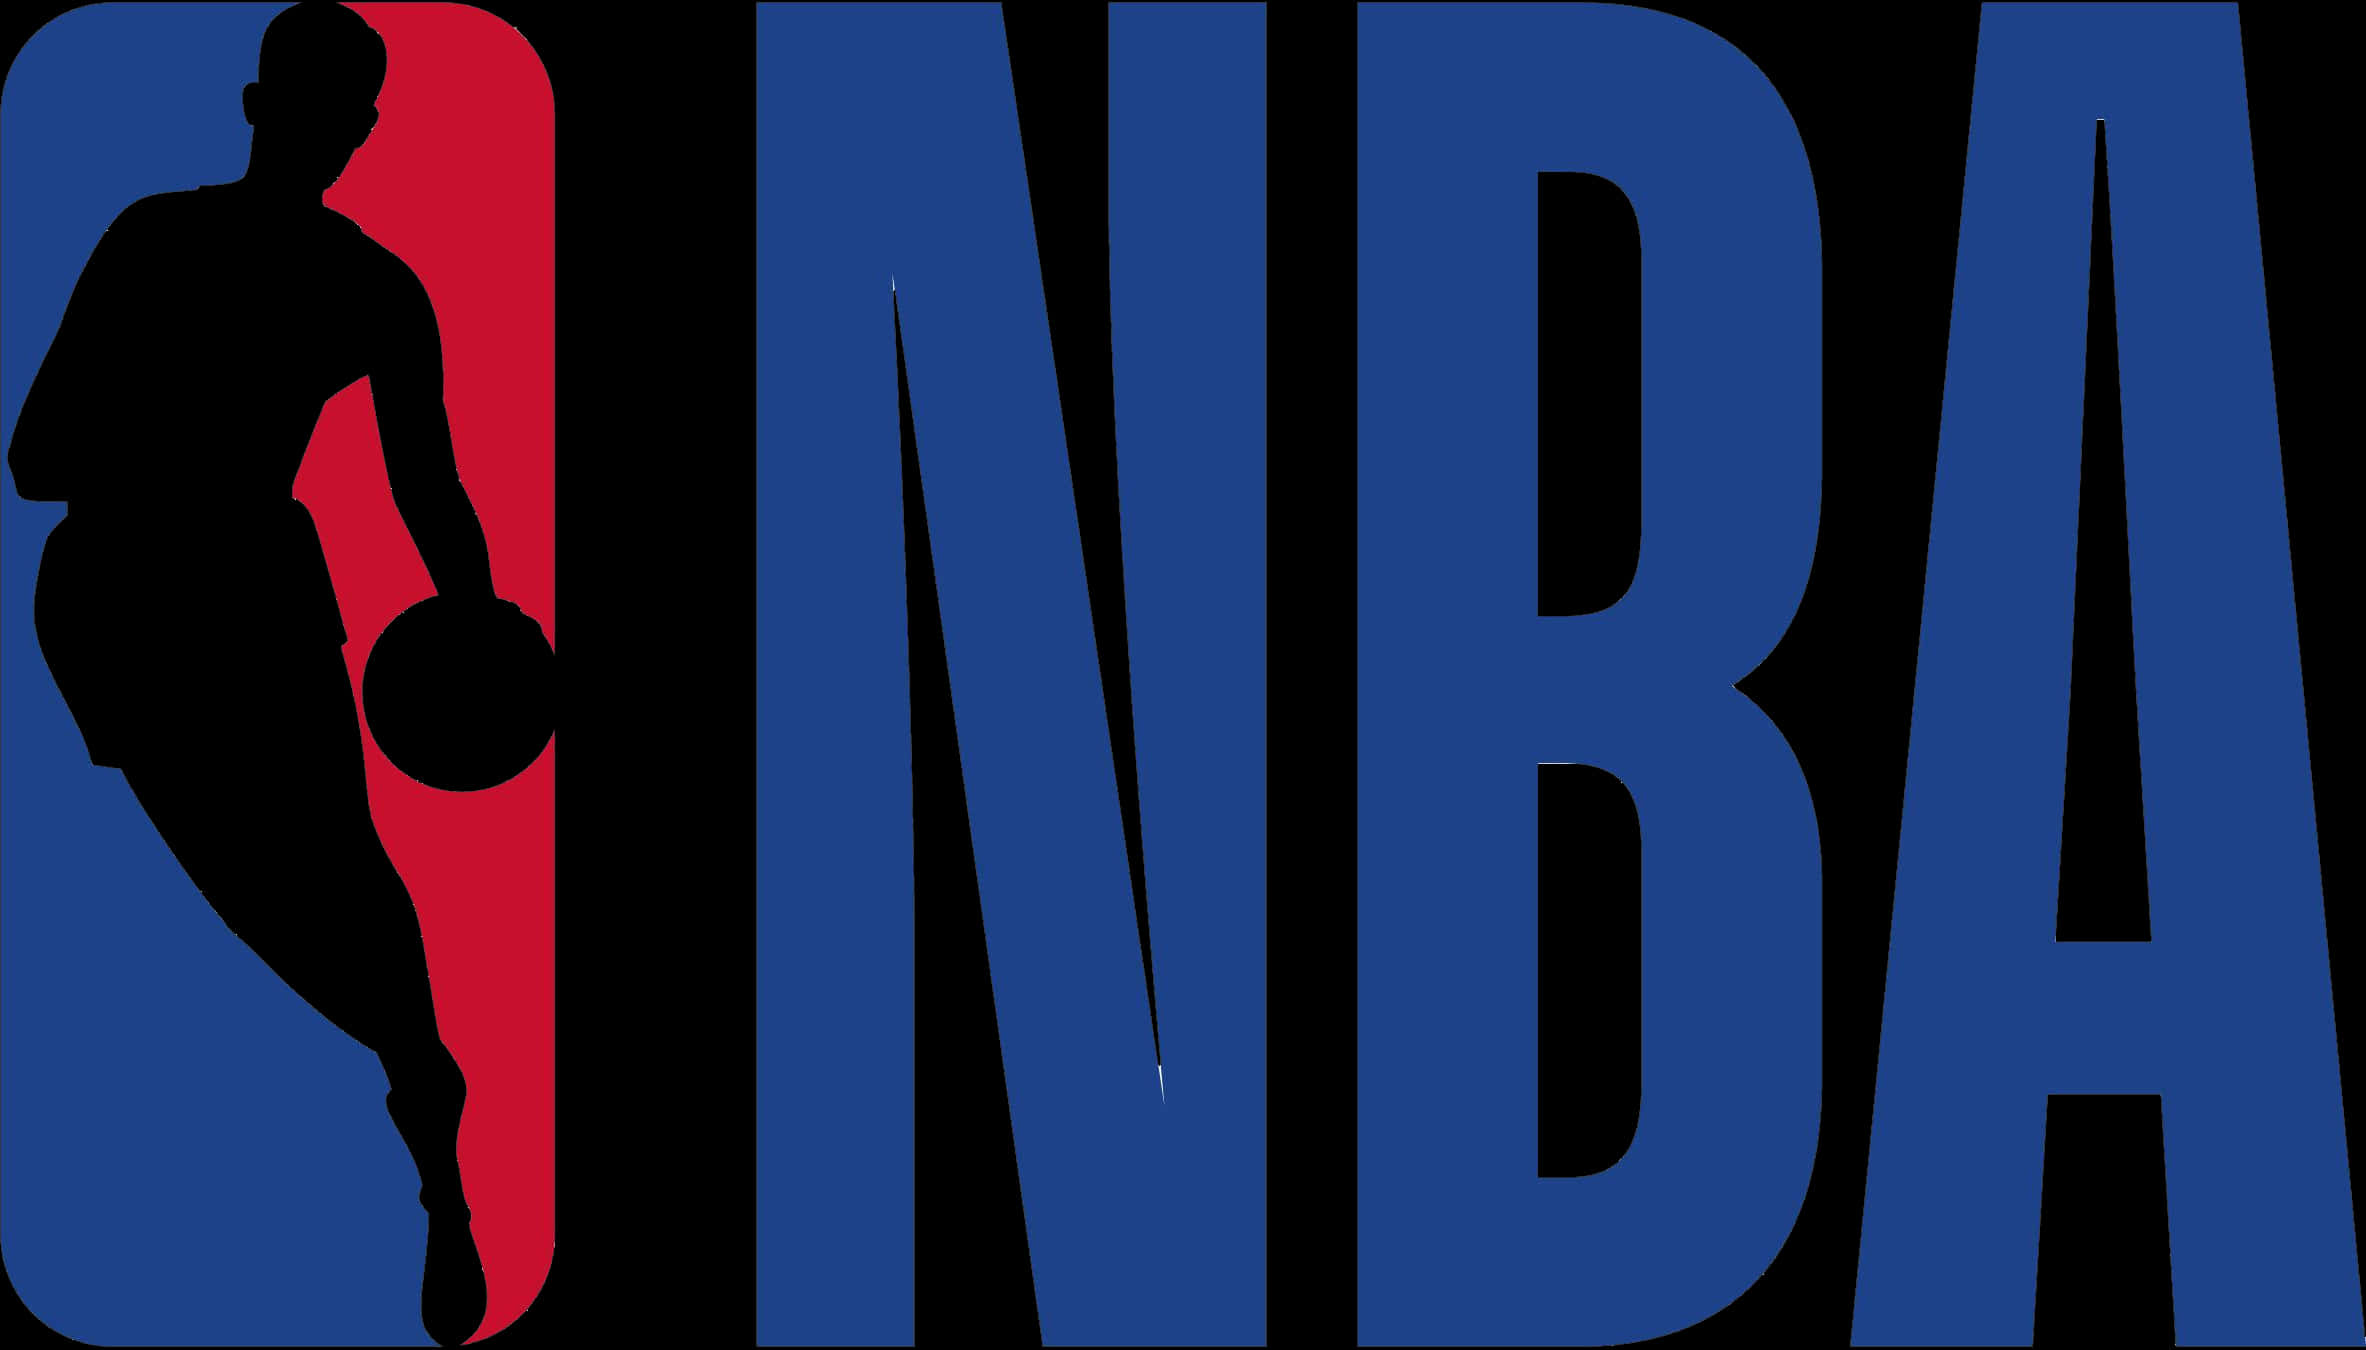 N B A Logo Iconic Basketball Design PNG